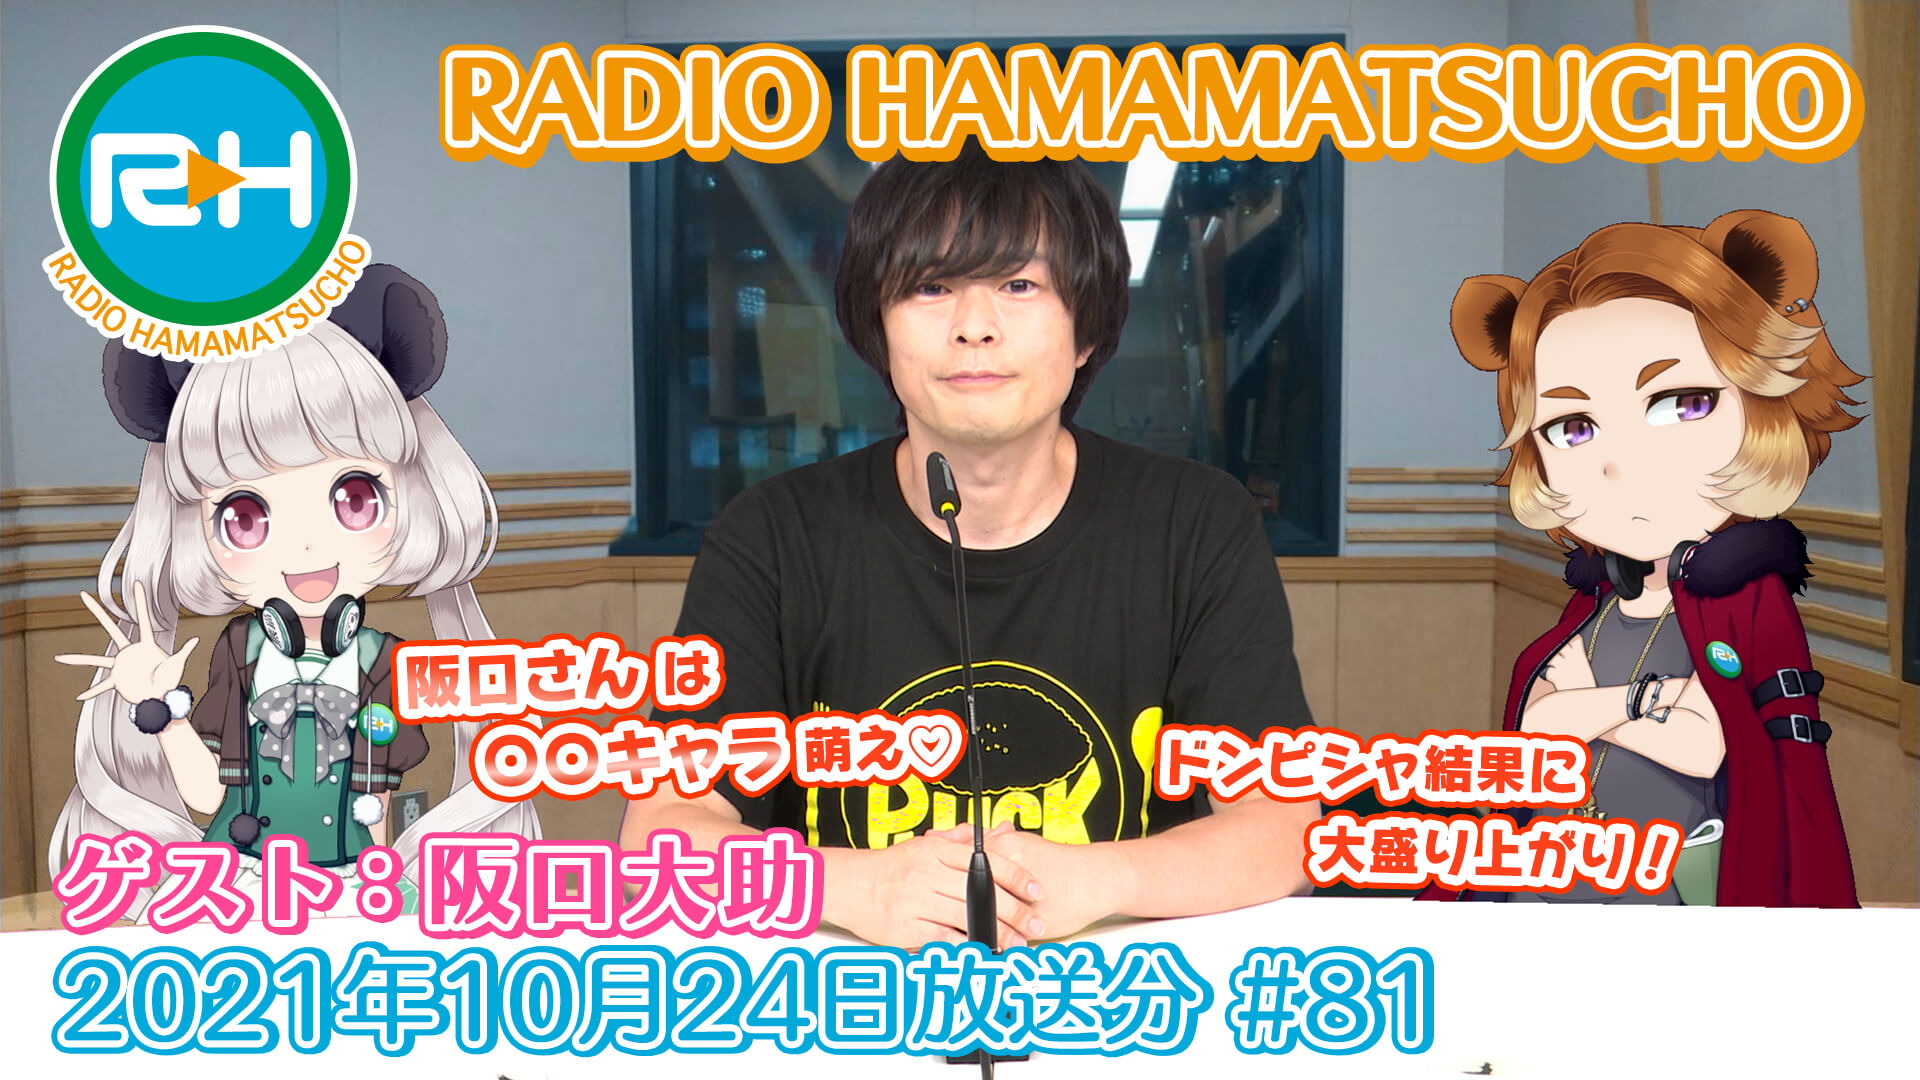 RADIO HAMAMATSUCHO 第81回 (2021年10月24日放送分) ゲスト: 阪口大助